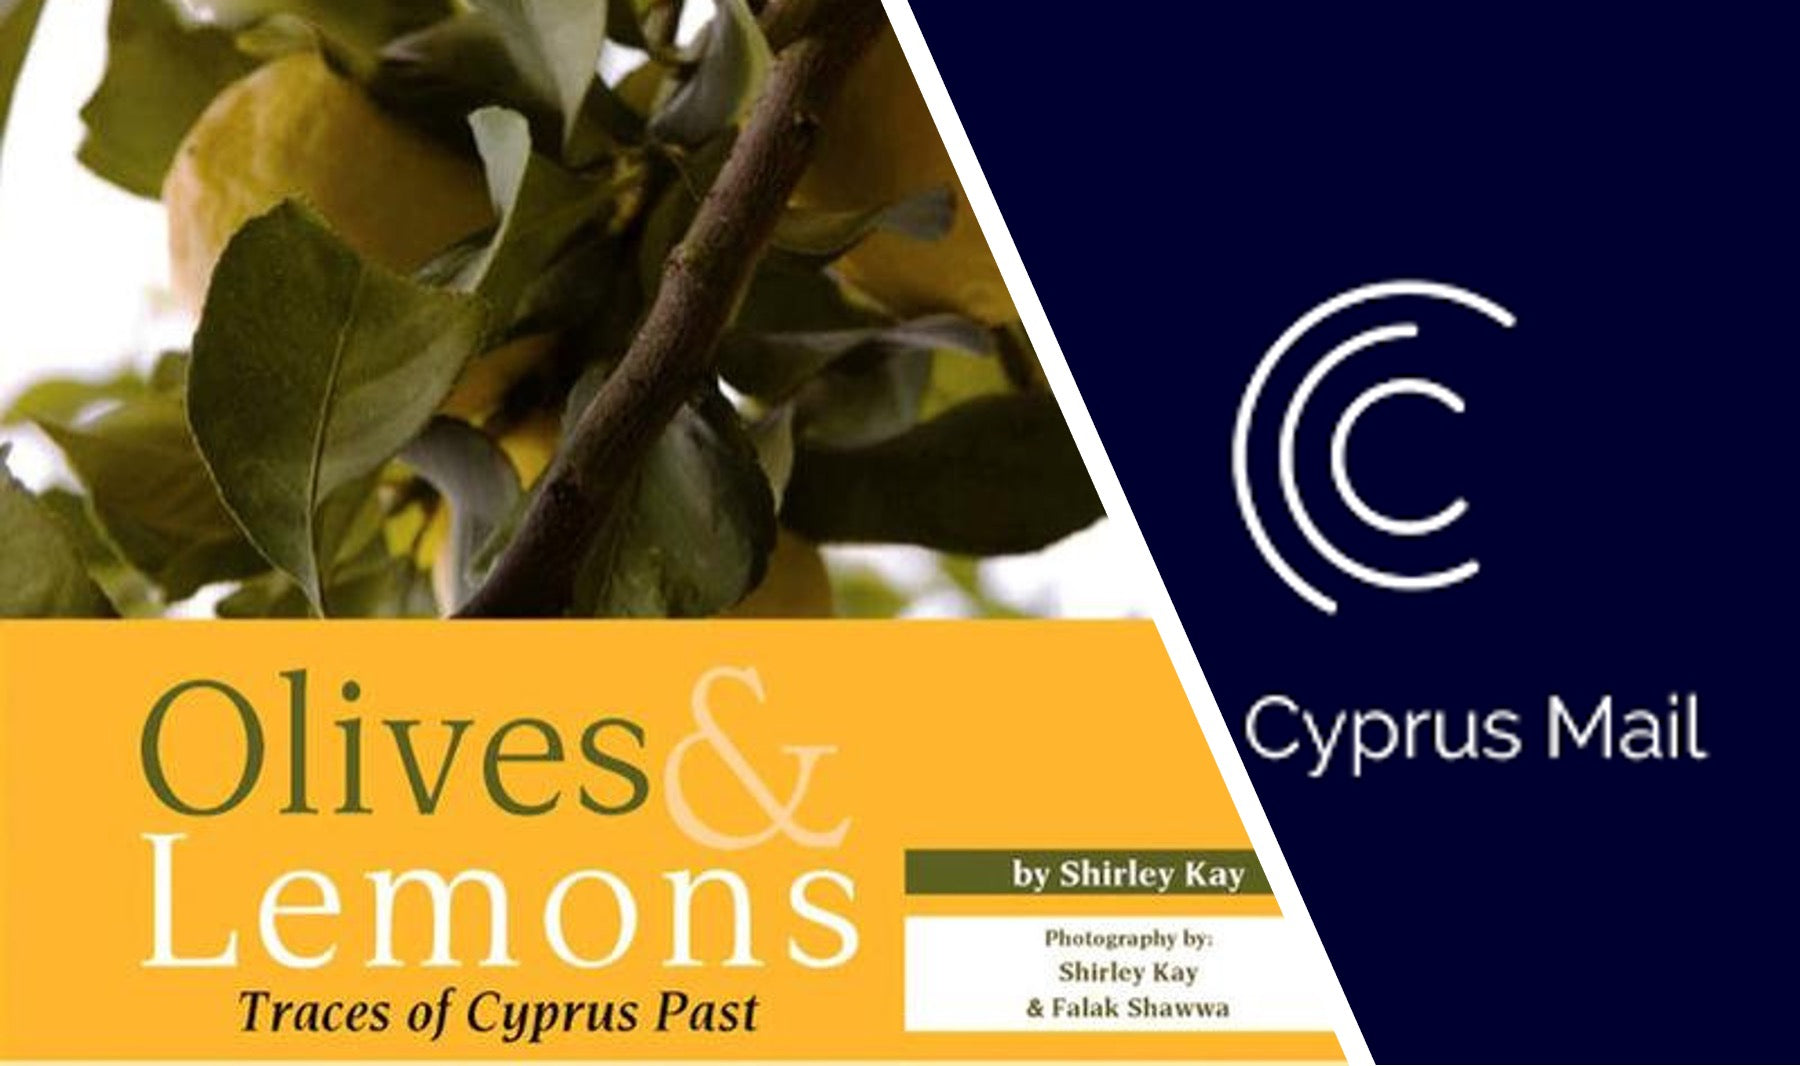 CYPRUS MAIL